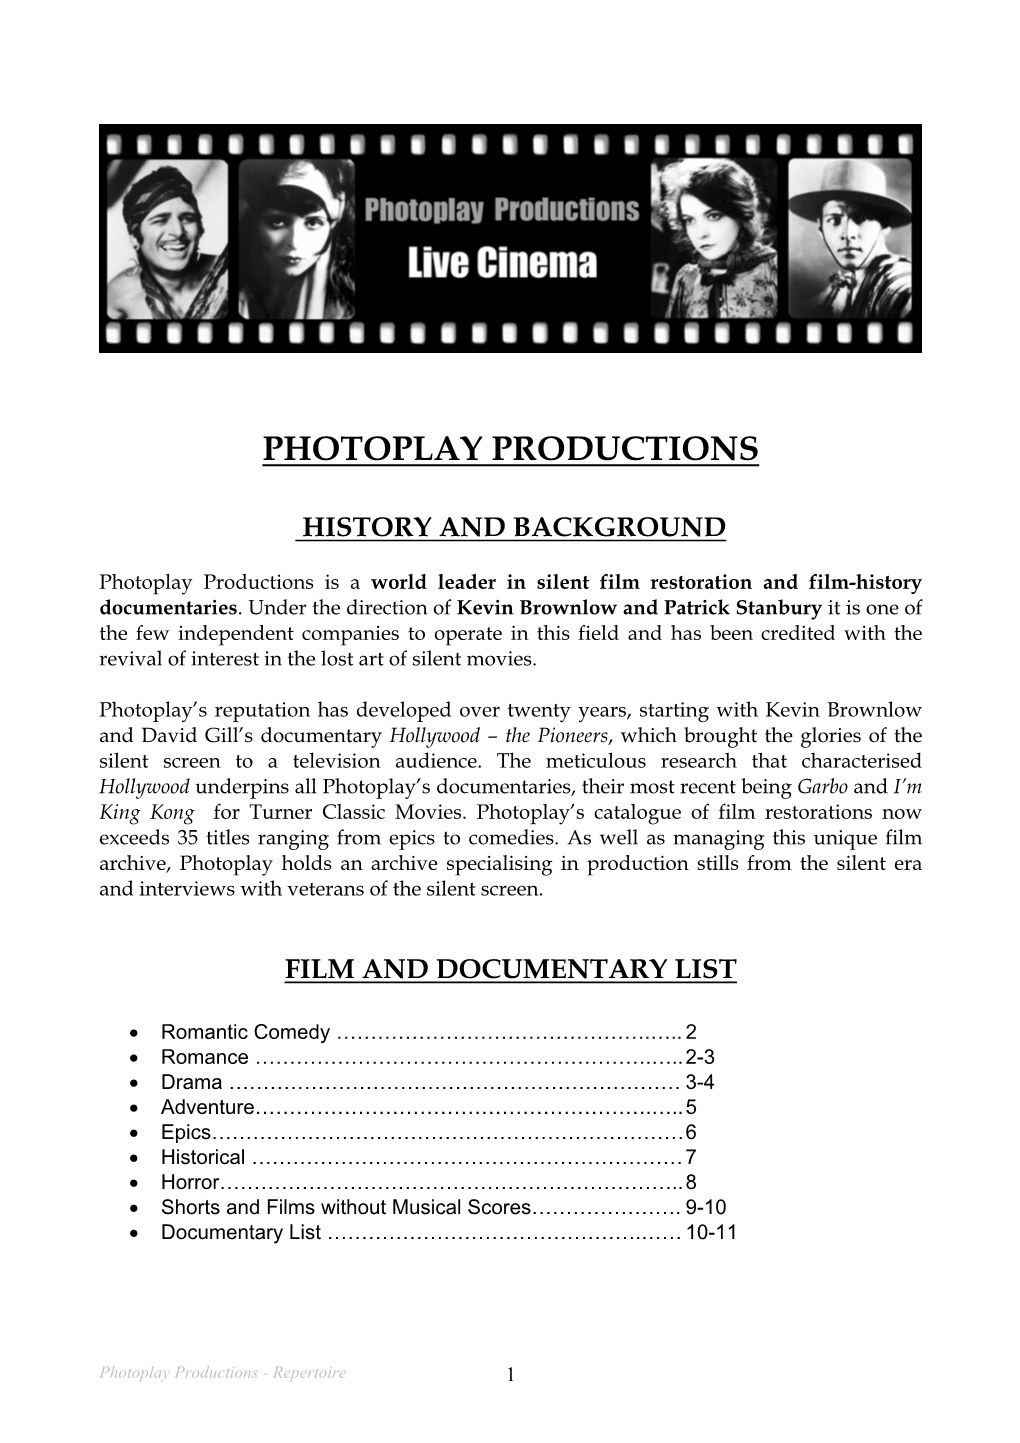 Film and Documentary List